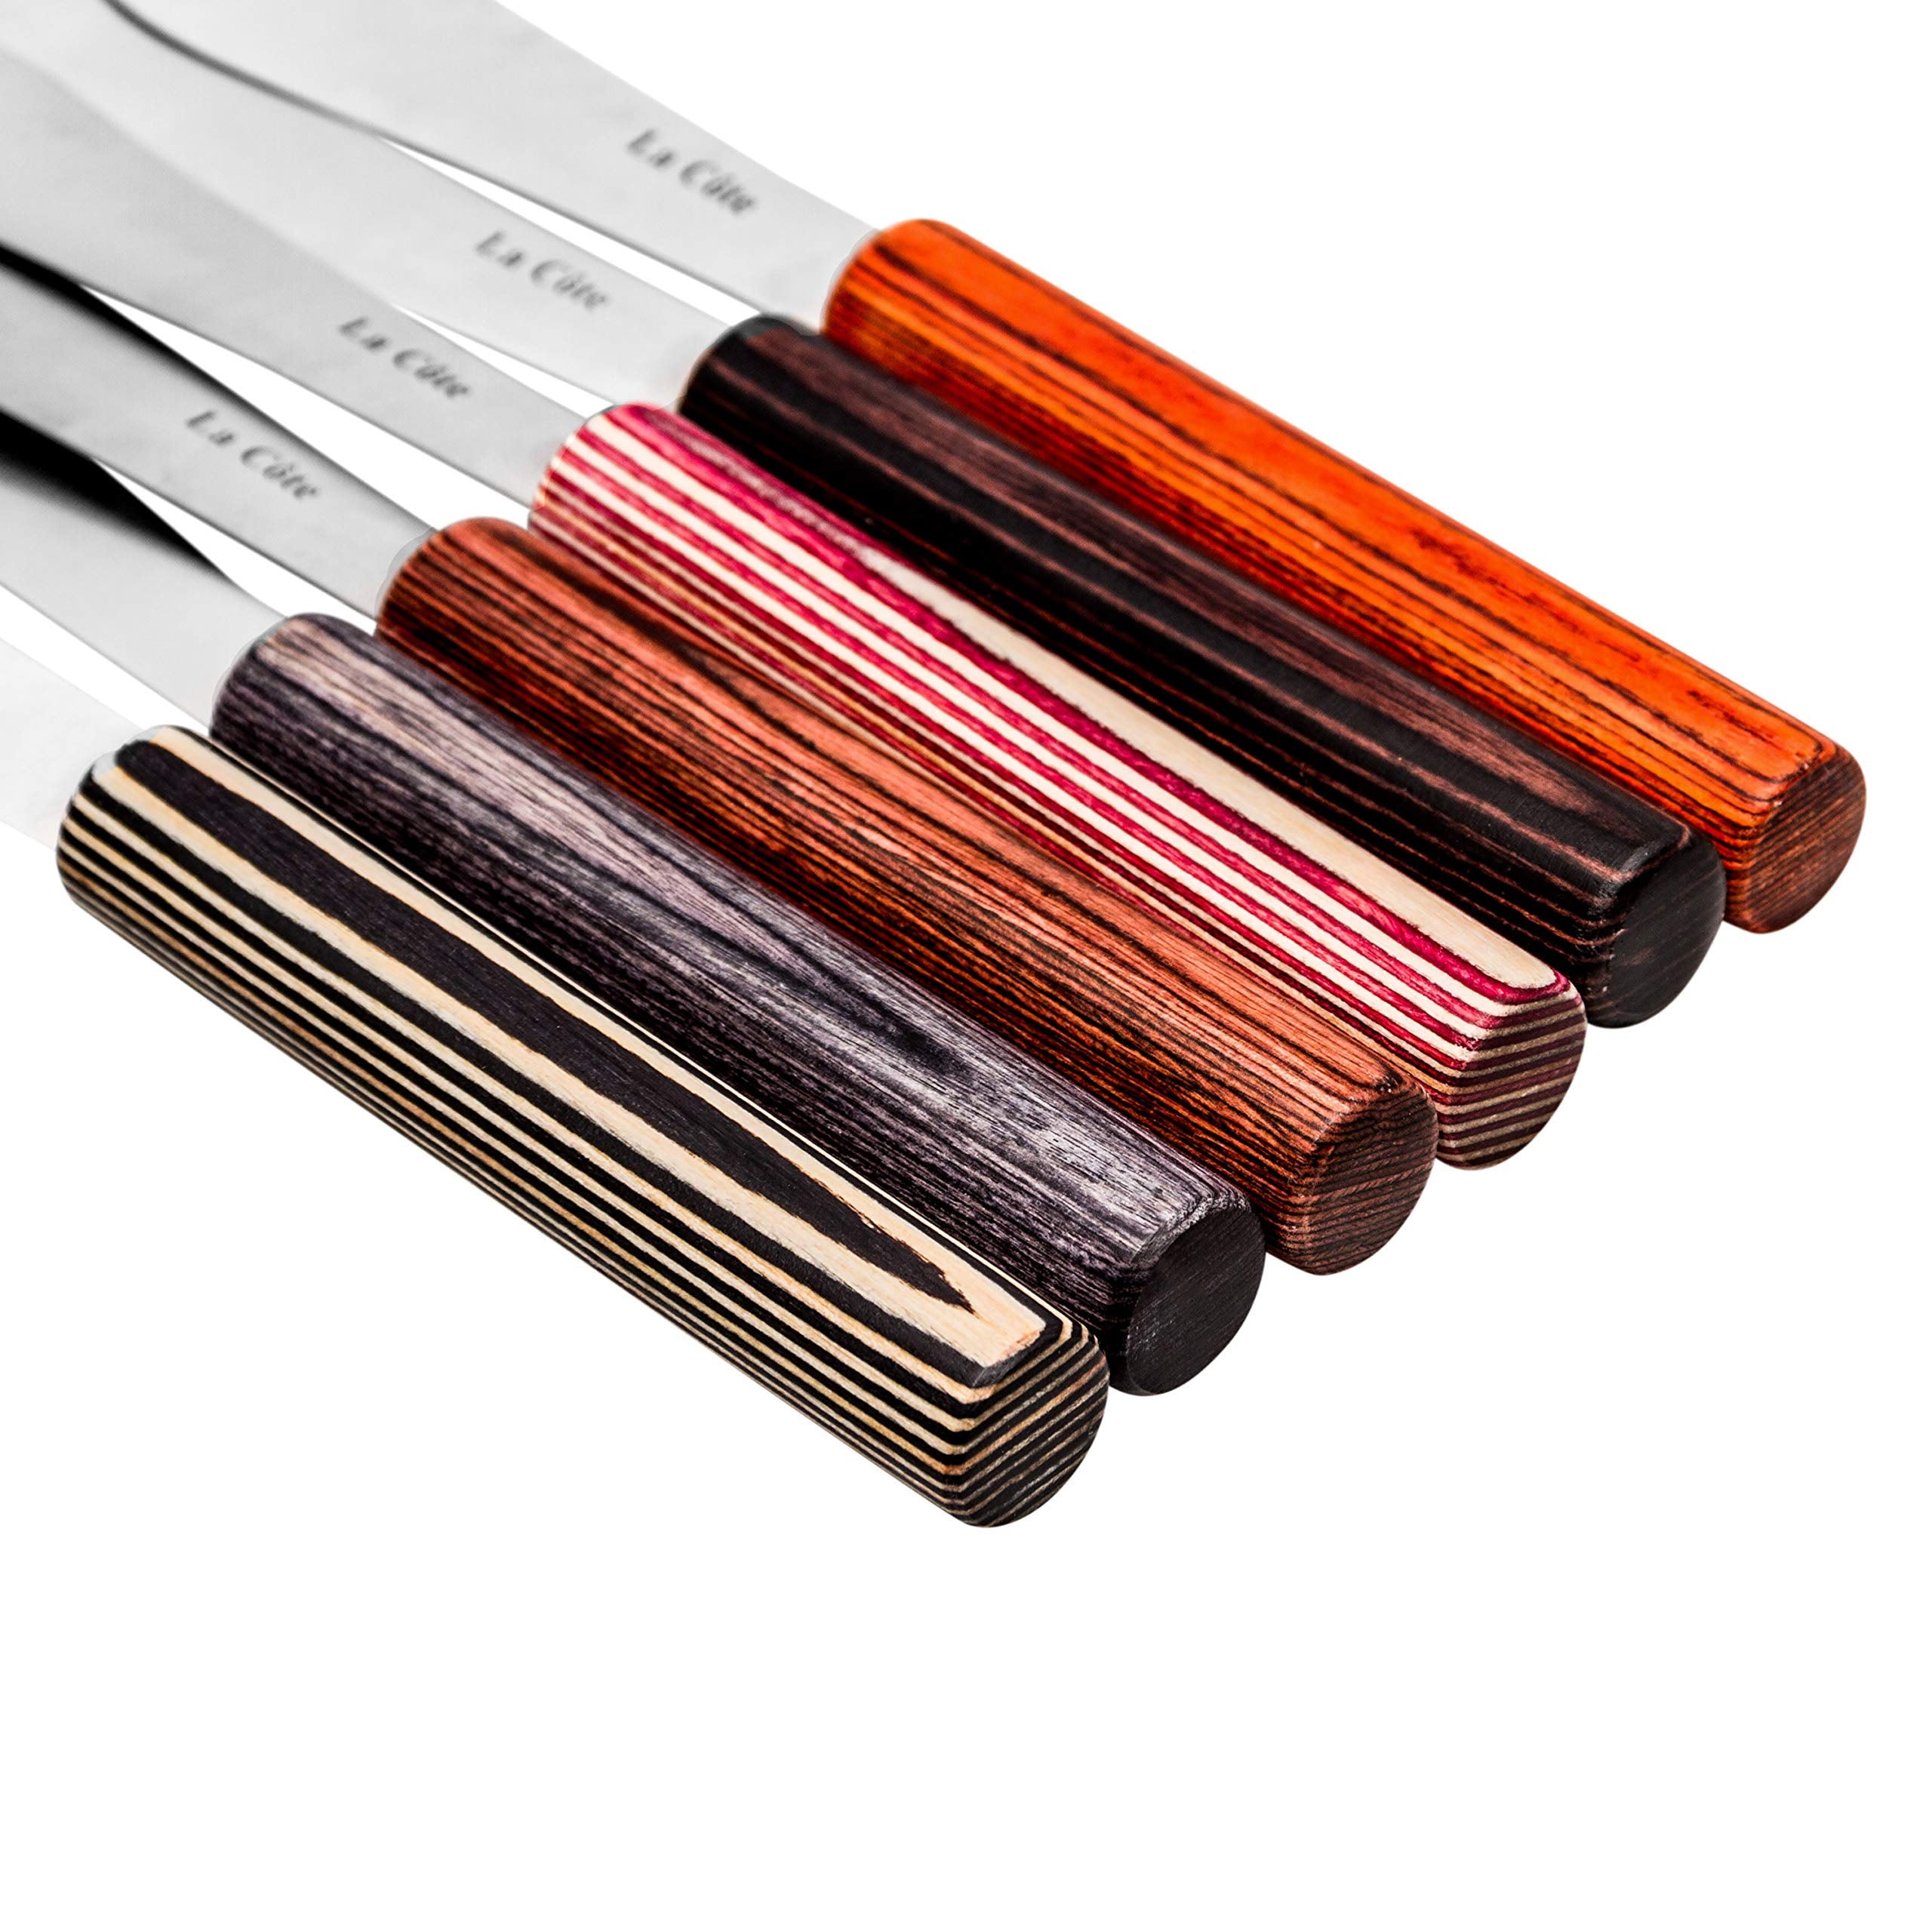 La Cote 6 Piece Cheese Knife Spreader Set Stainless Steel Blade Pakka Wood Handle (7.5 inch)